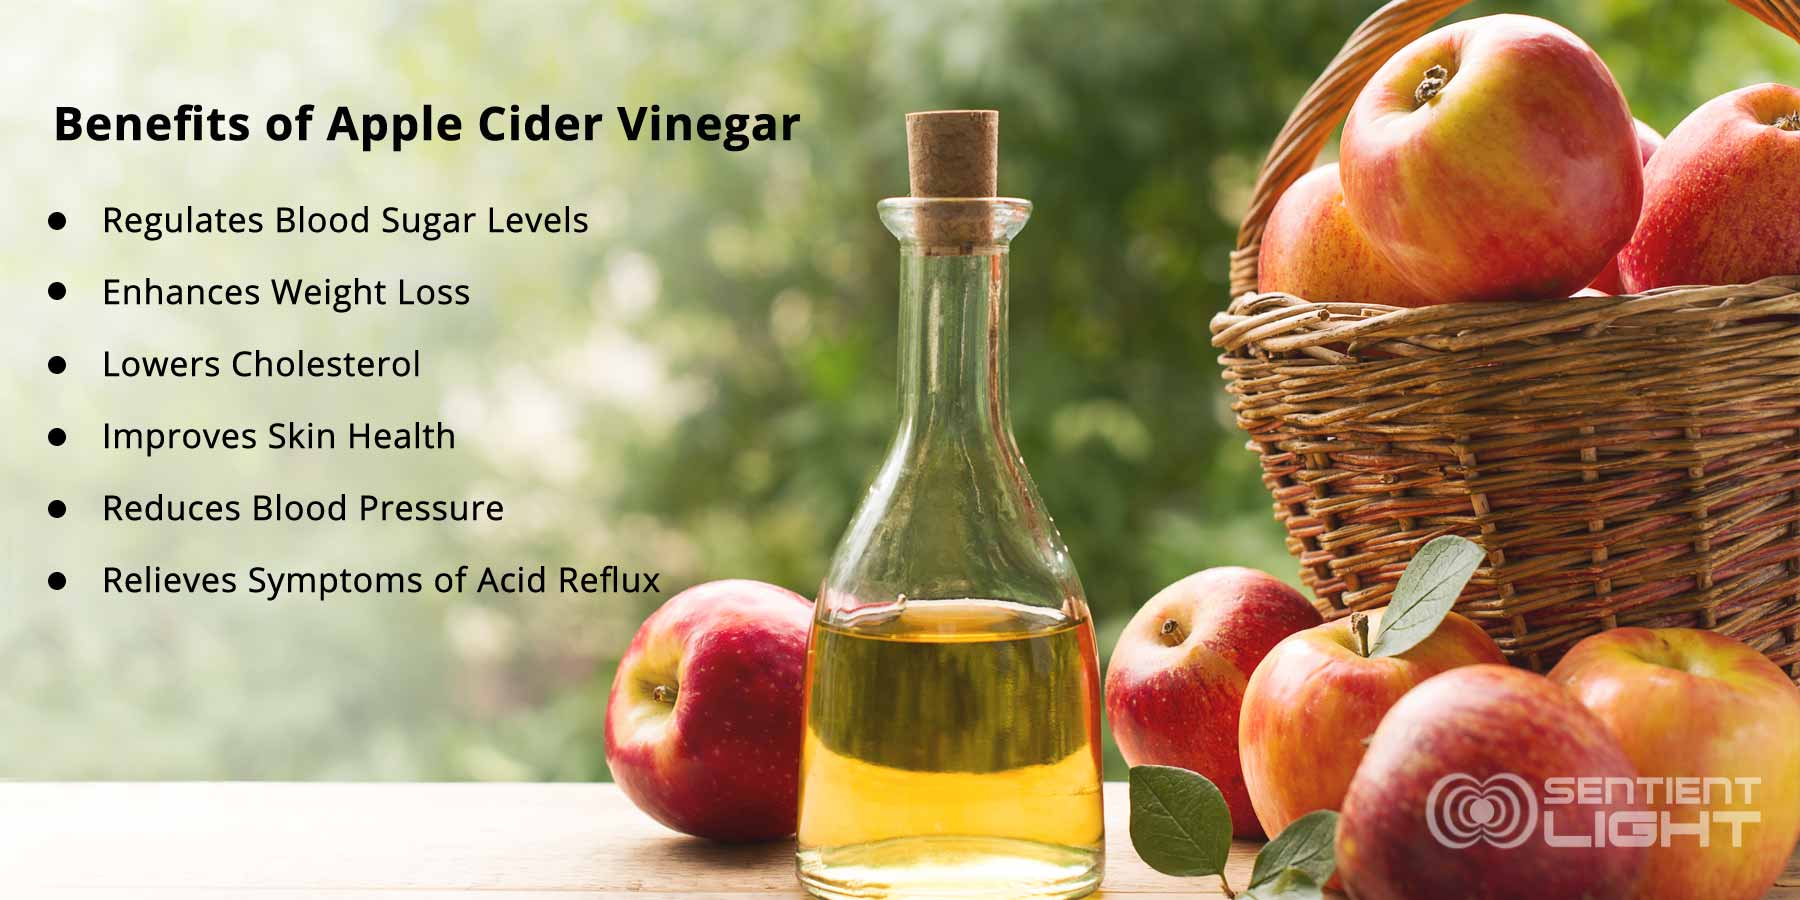 benefits apple cider vinegar